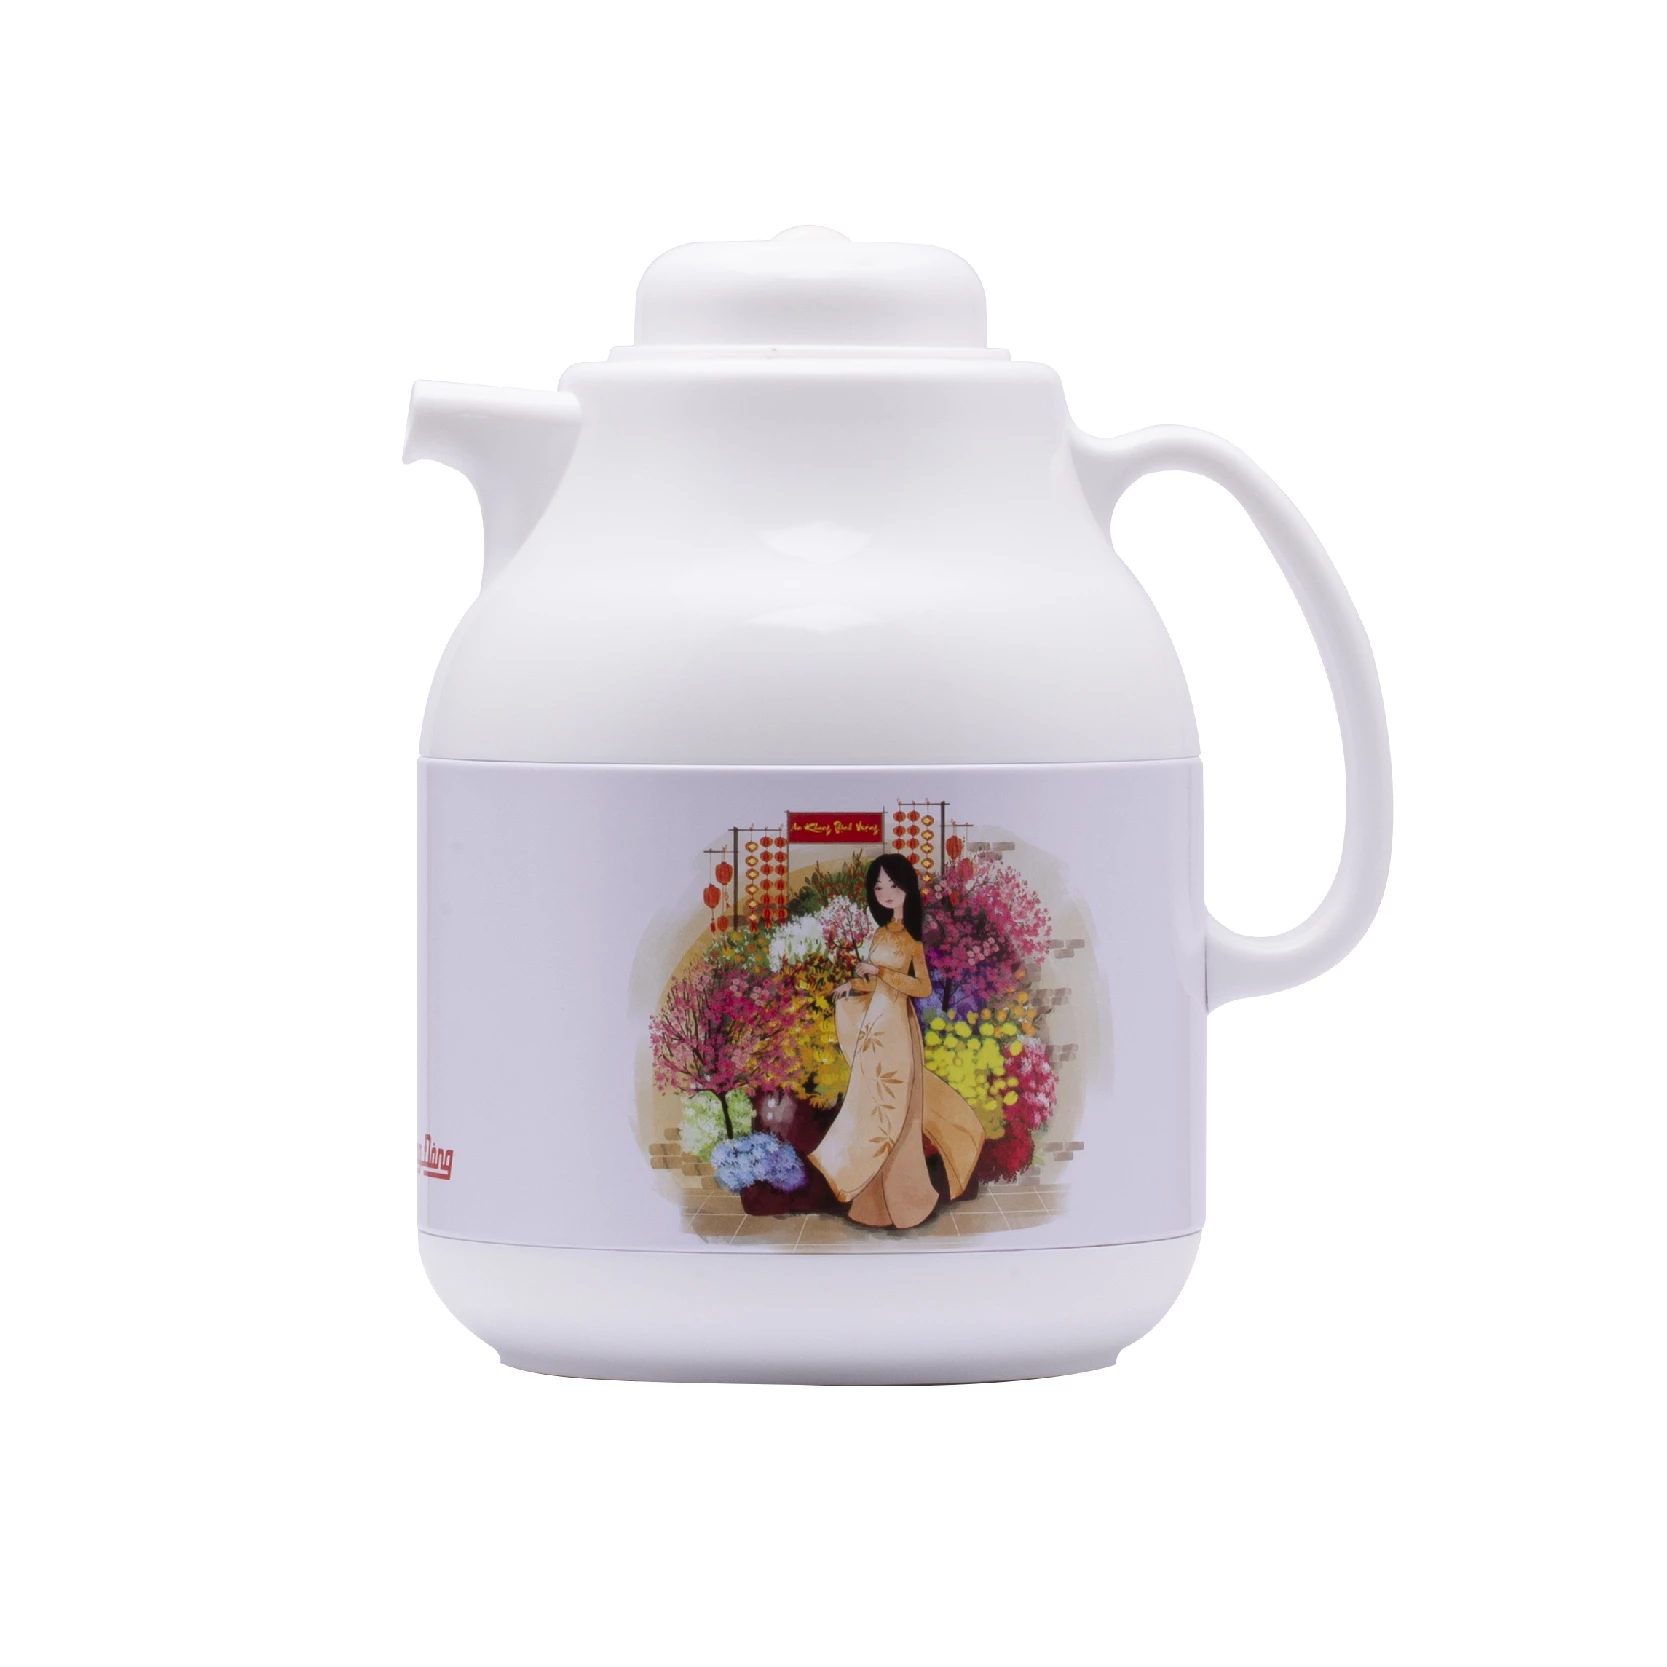 https://vacuumflask.rangdong.com.vn/static/Tea-series-1/av4.jpg